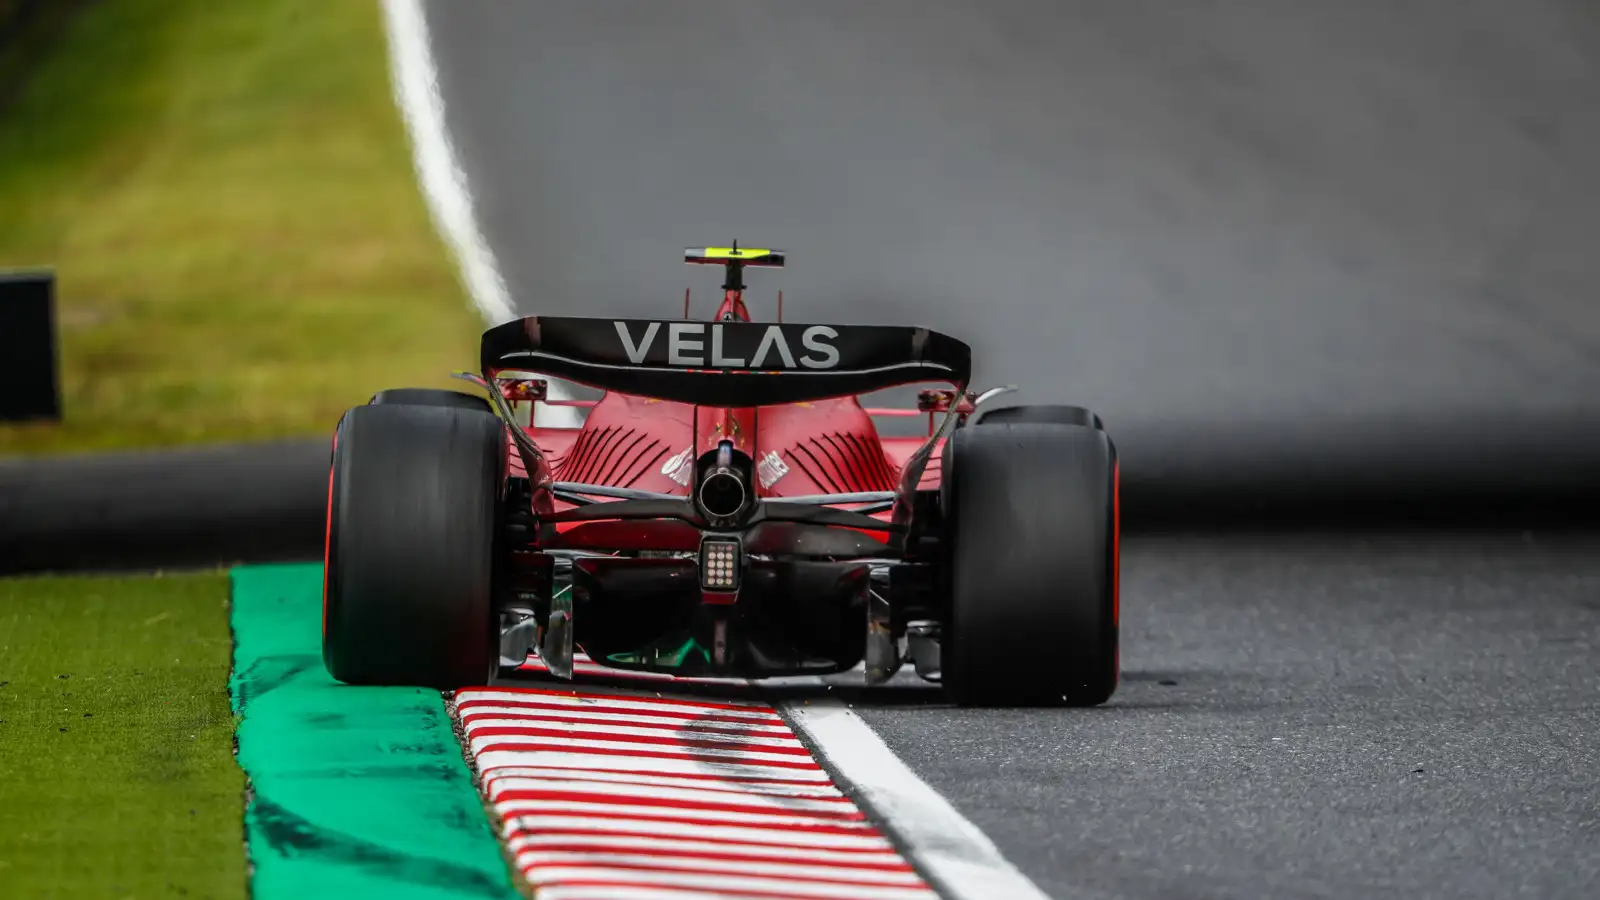 Carlos Sainz in the Ferrari rear shot. Japan October 2022